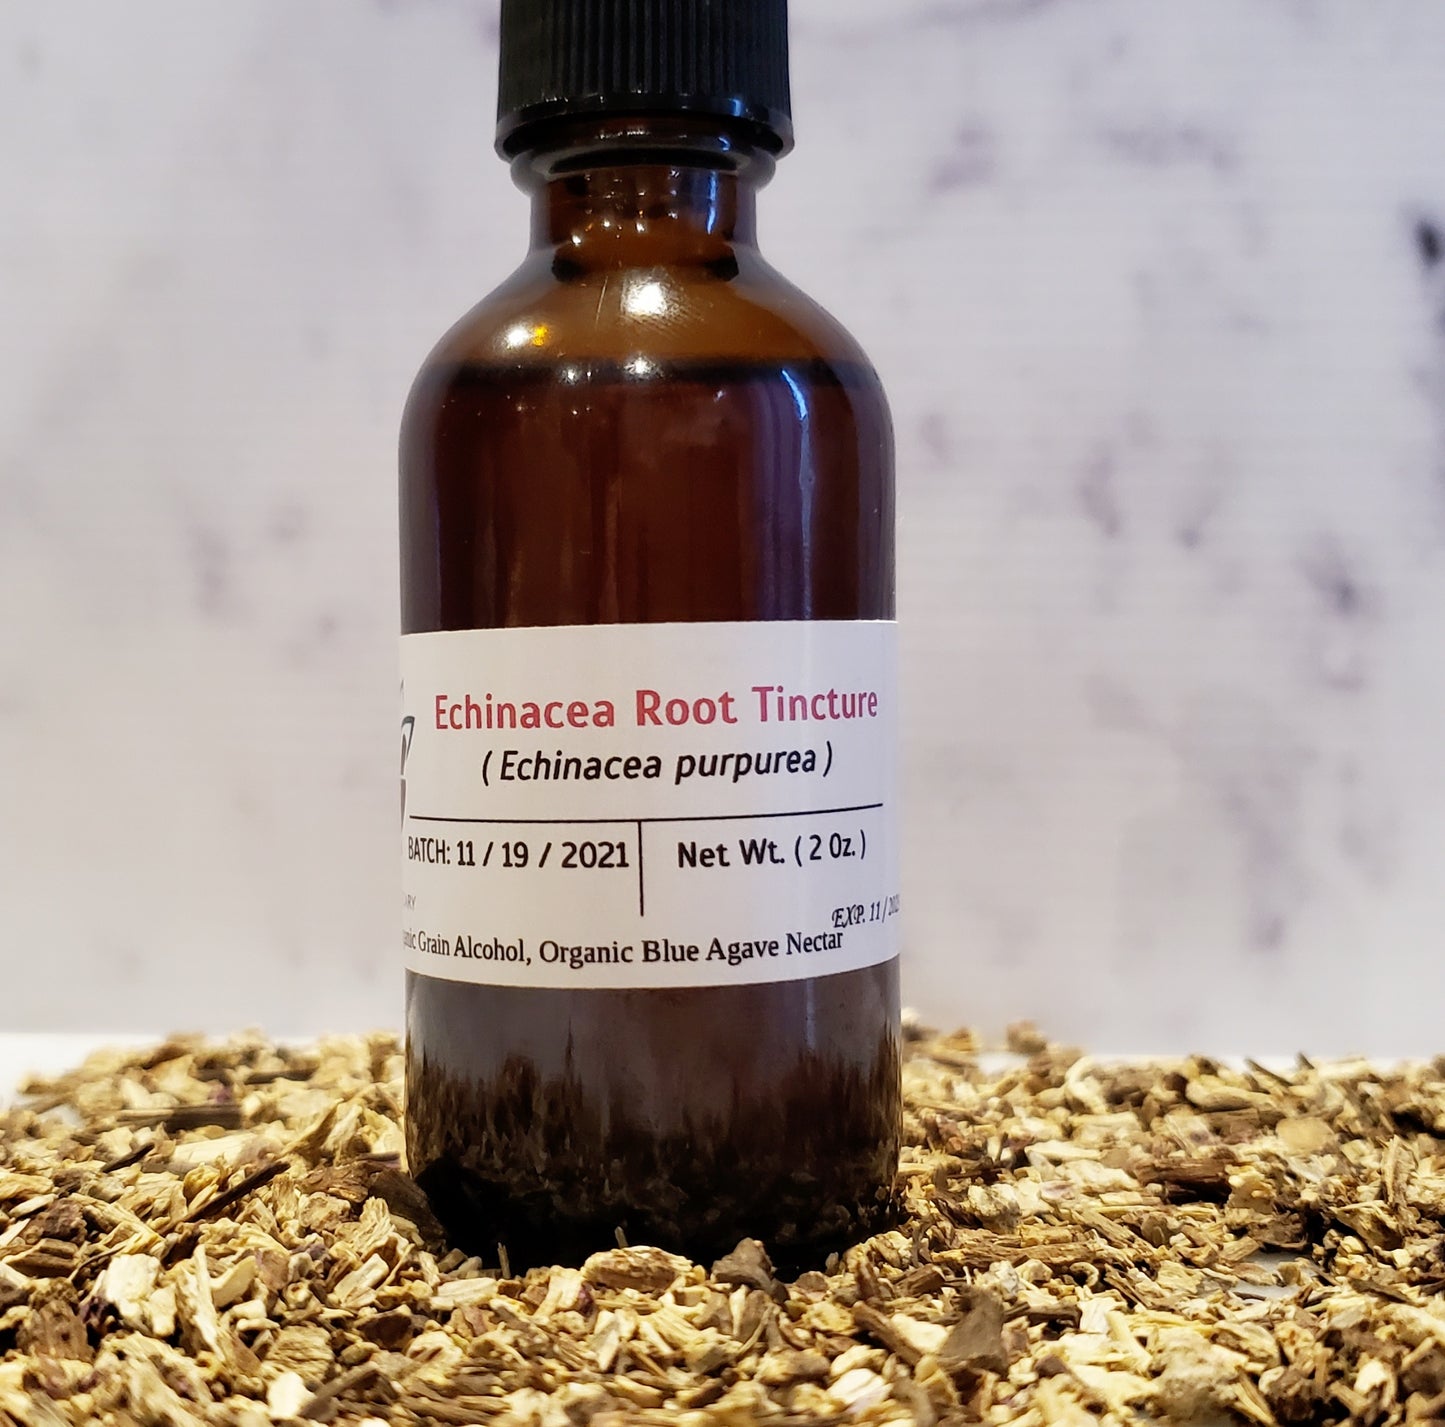 Echinacea Root Tincture (Echinacea purpurea) - Buy One Get One Free!